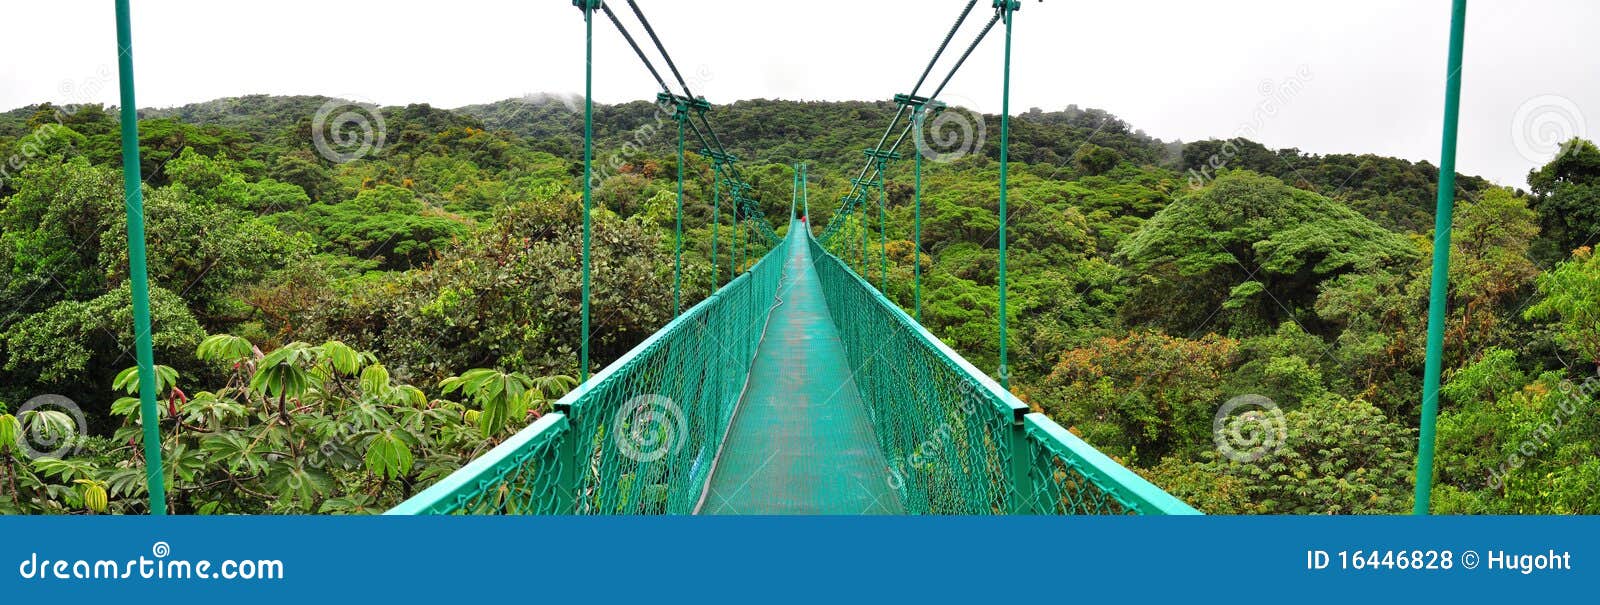 cloud forest hanging bridge, costa rica